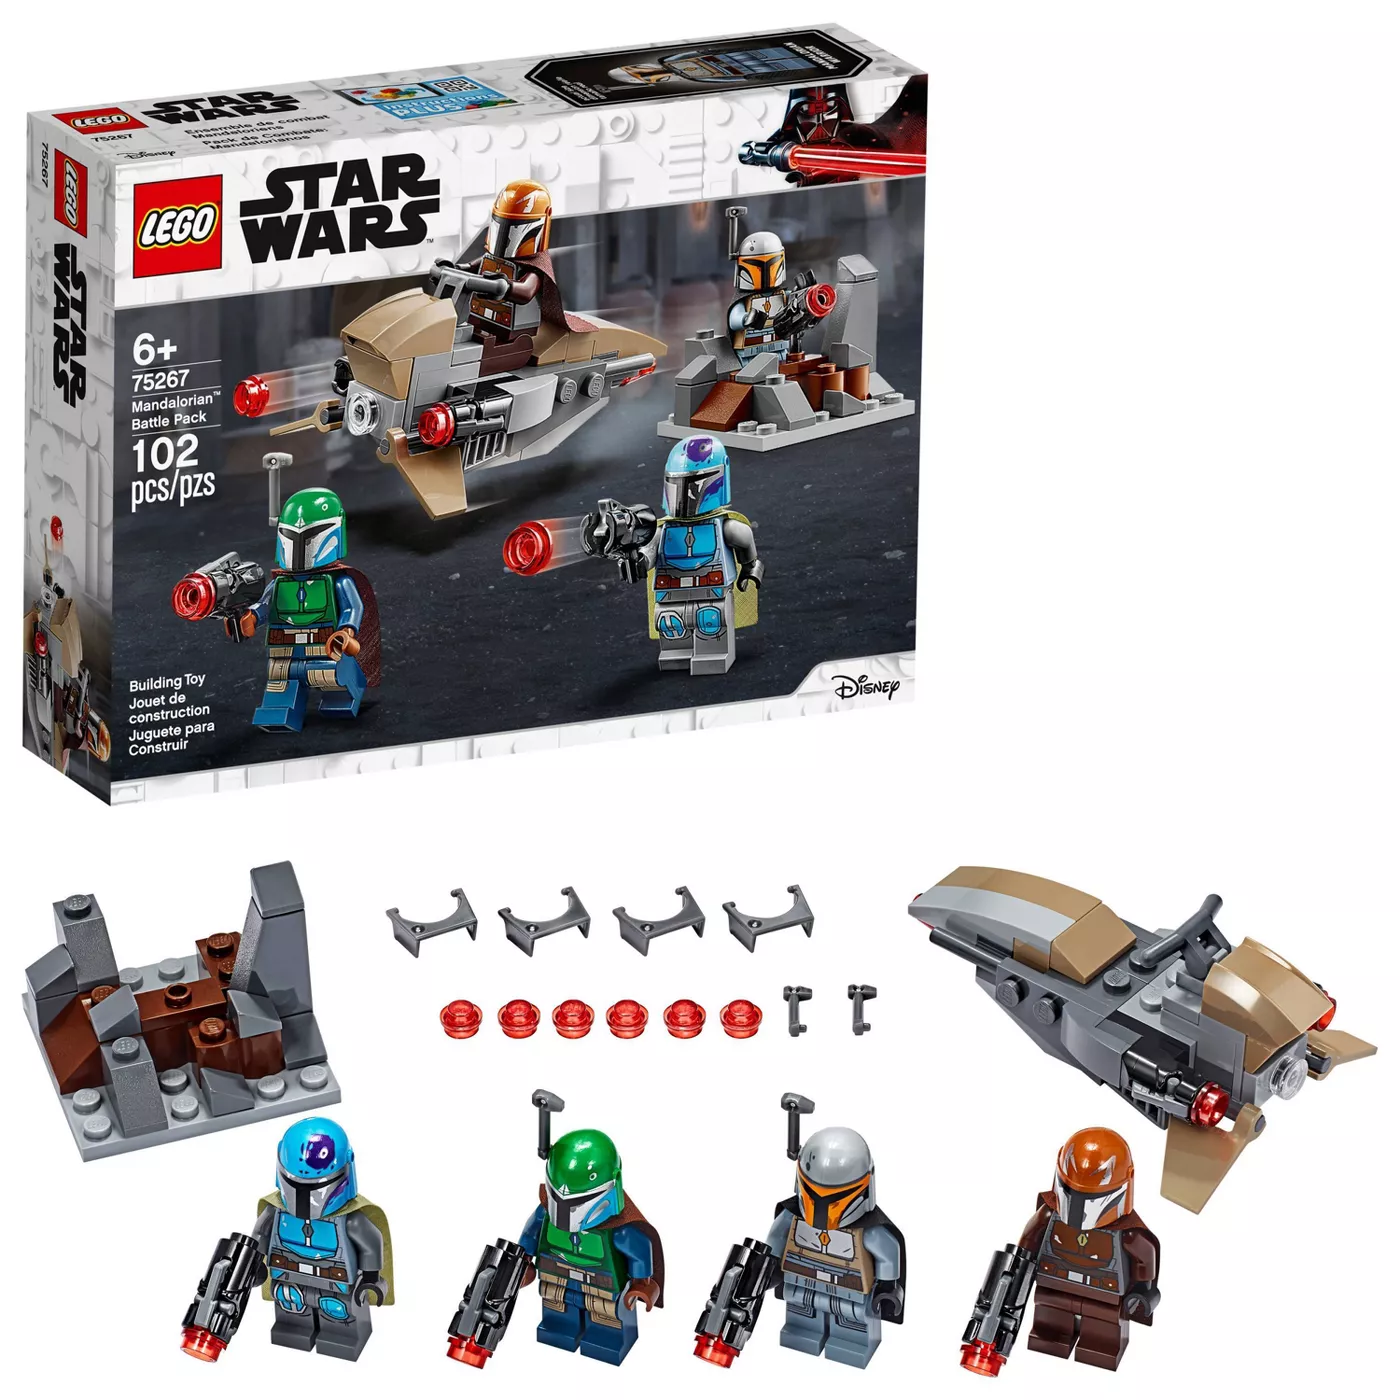 LEGO Star Wars Mandalorian Battle Pack Shock Troopers and Speeder Bike Building Kit 75267 - image 1 of 8